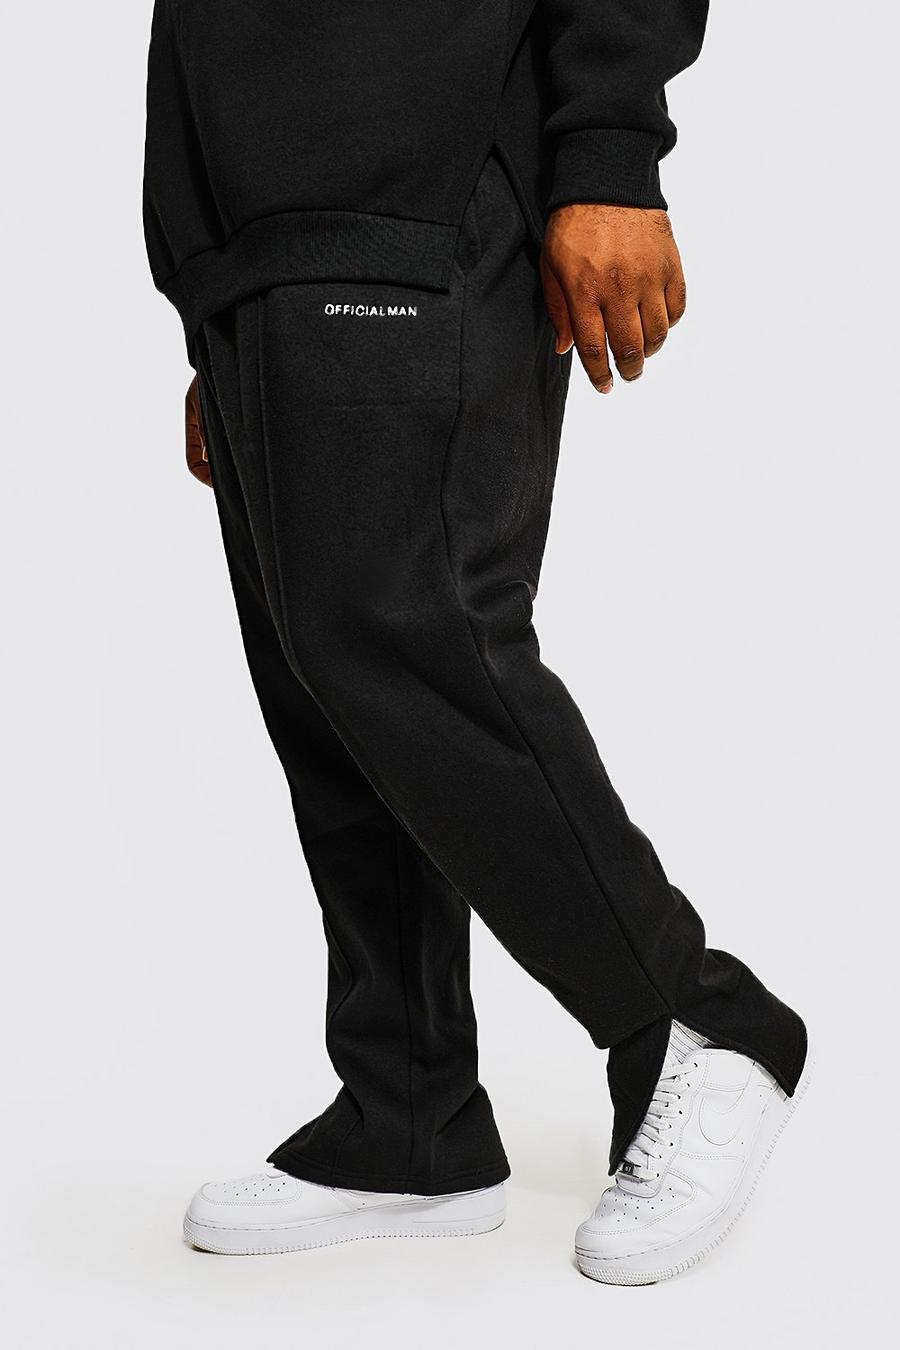 Pantaloni tuta Plus Size Slim Fit Man Official con spacco, Black negro image number 1